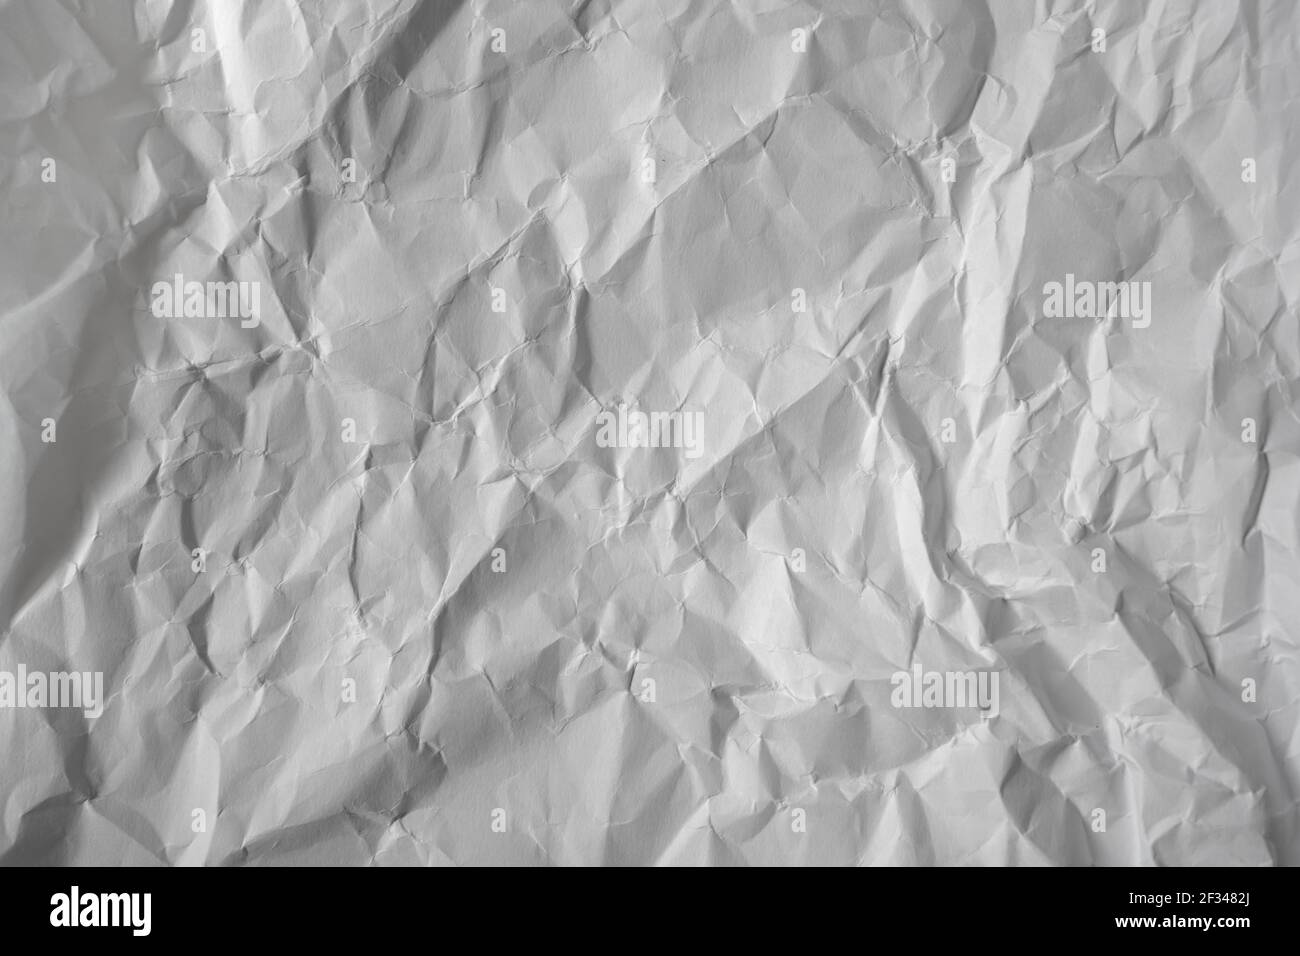 https://c8.alamy.com/comp/2F3482J/crumpled-white-paper-texture-looks-like-a-marble-2F3482J.jpg